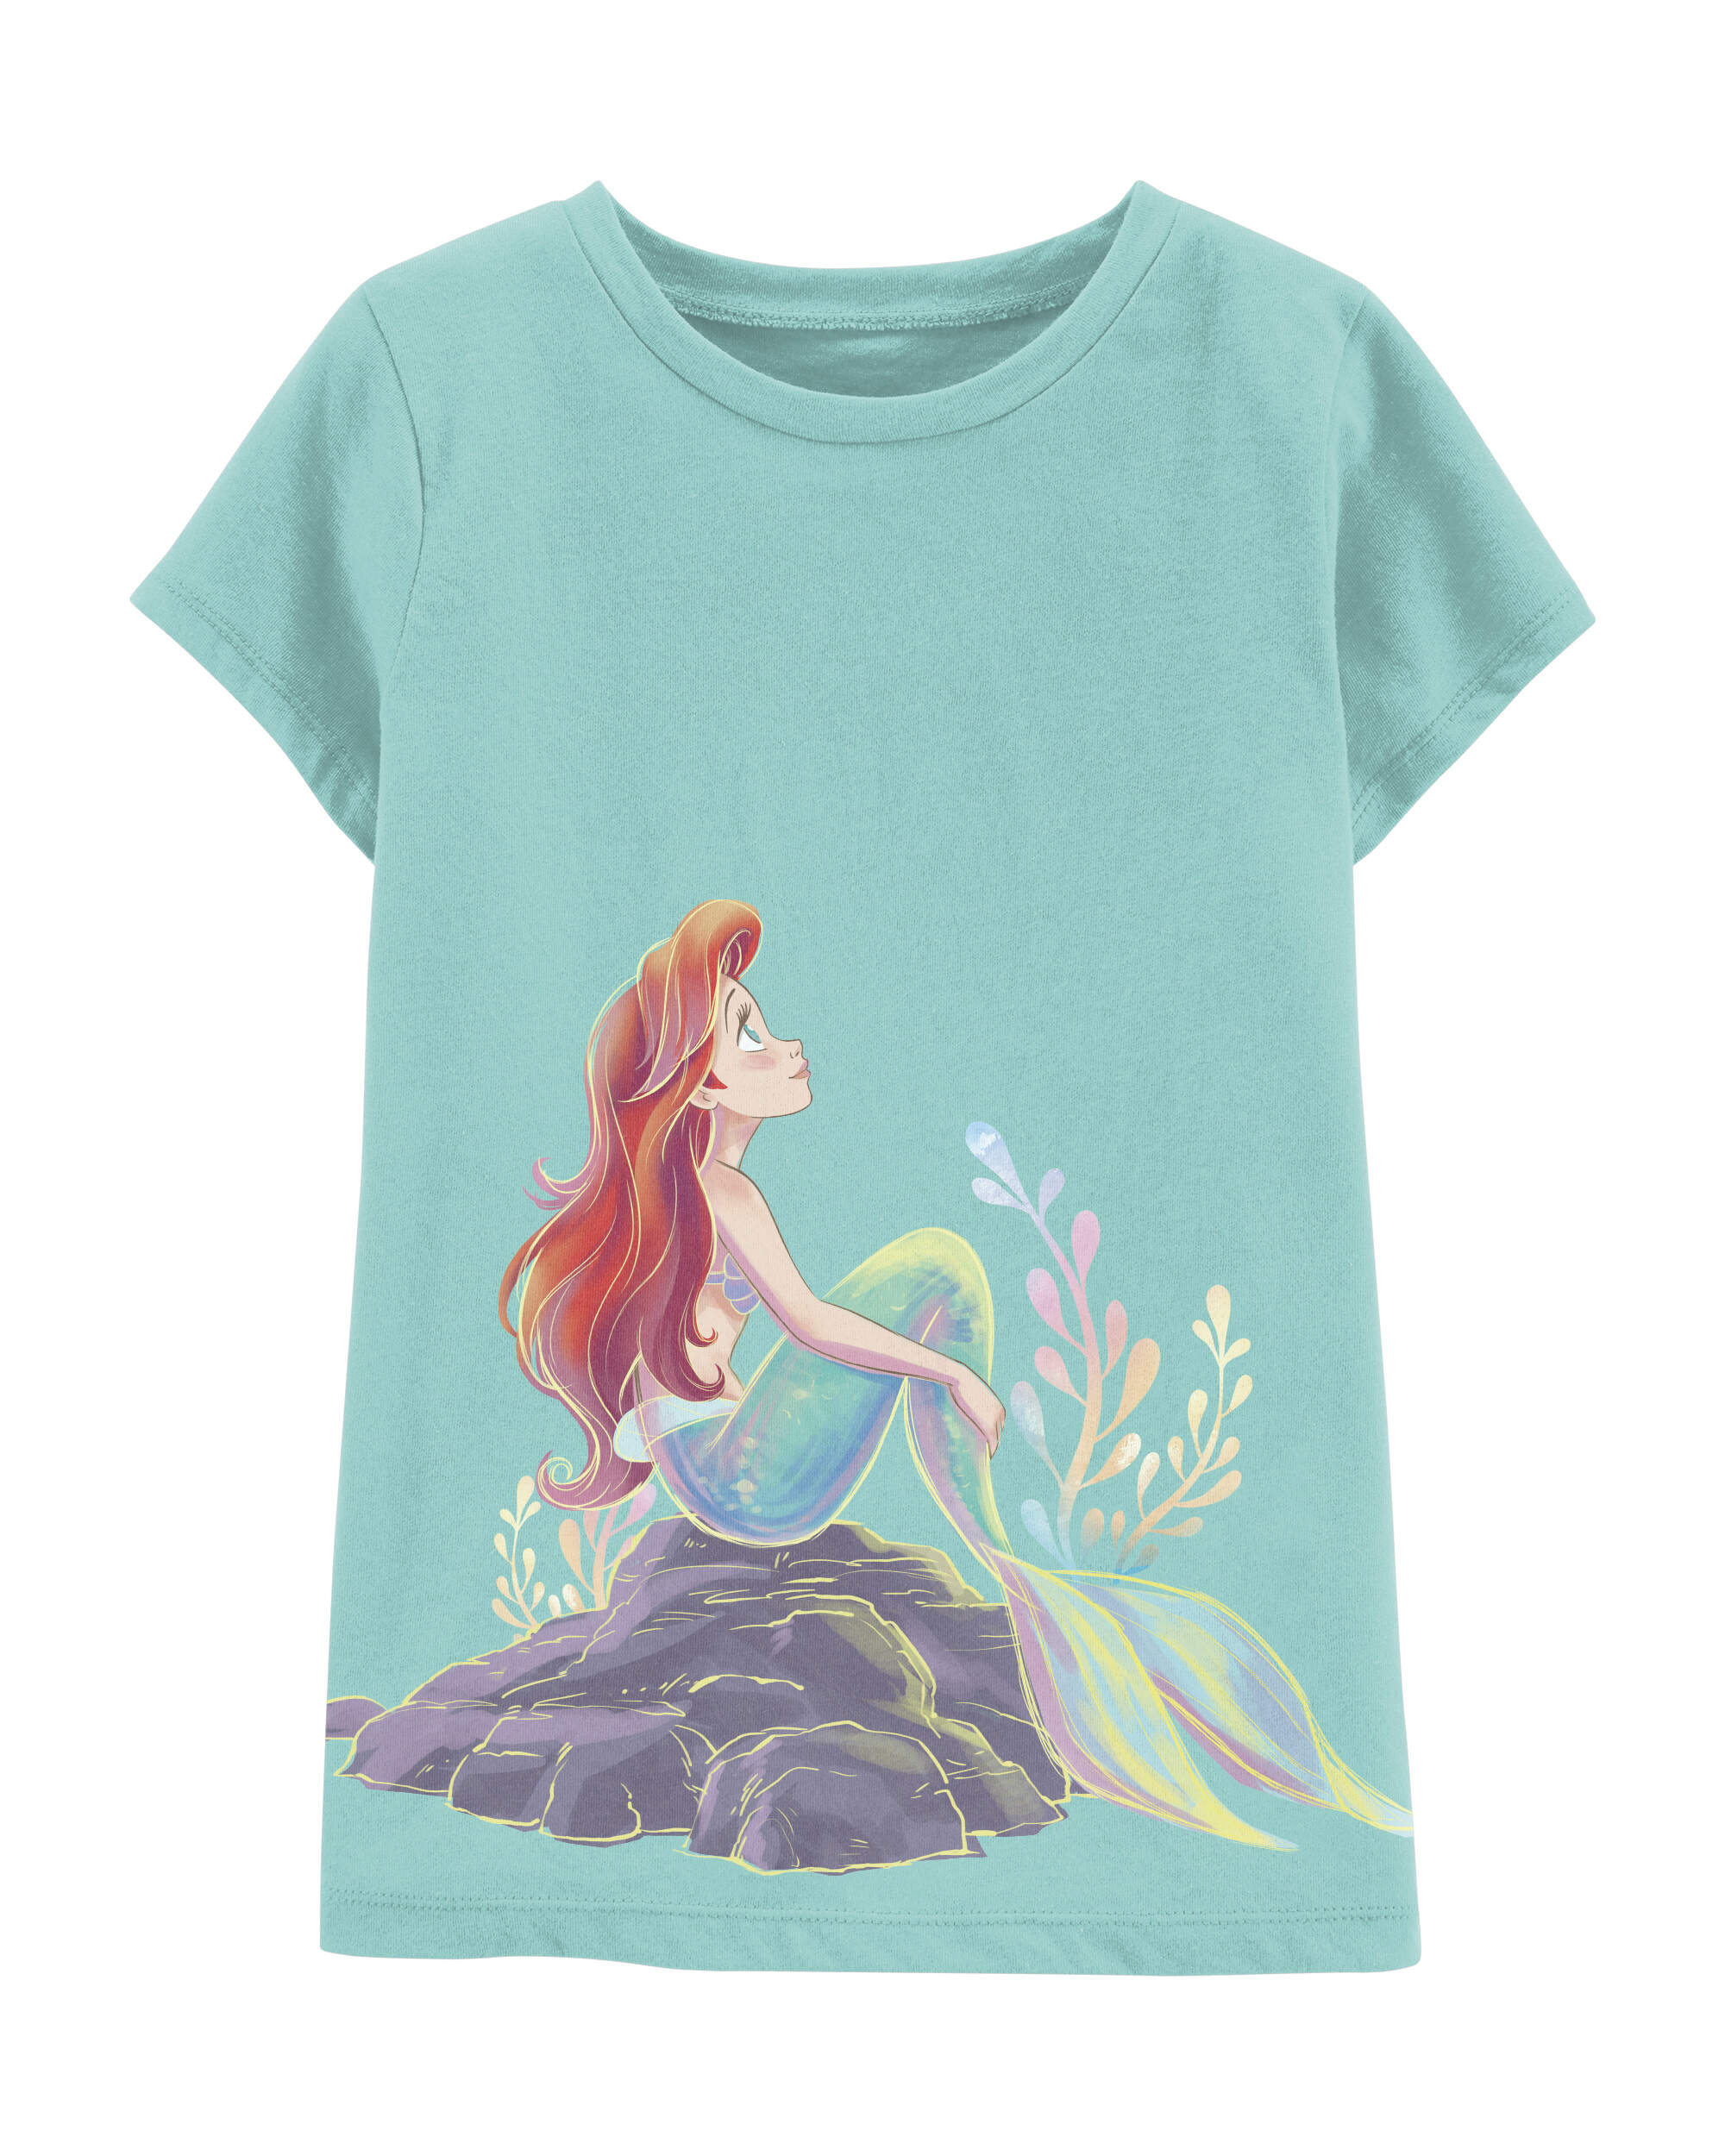 The Little Mermaid Graphic Tee